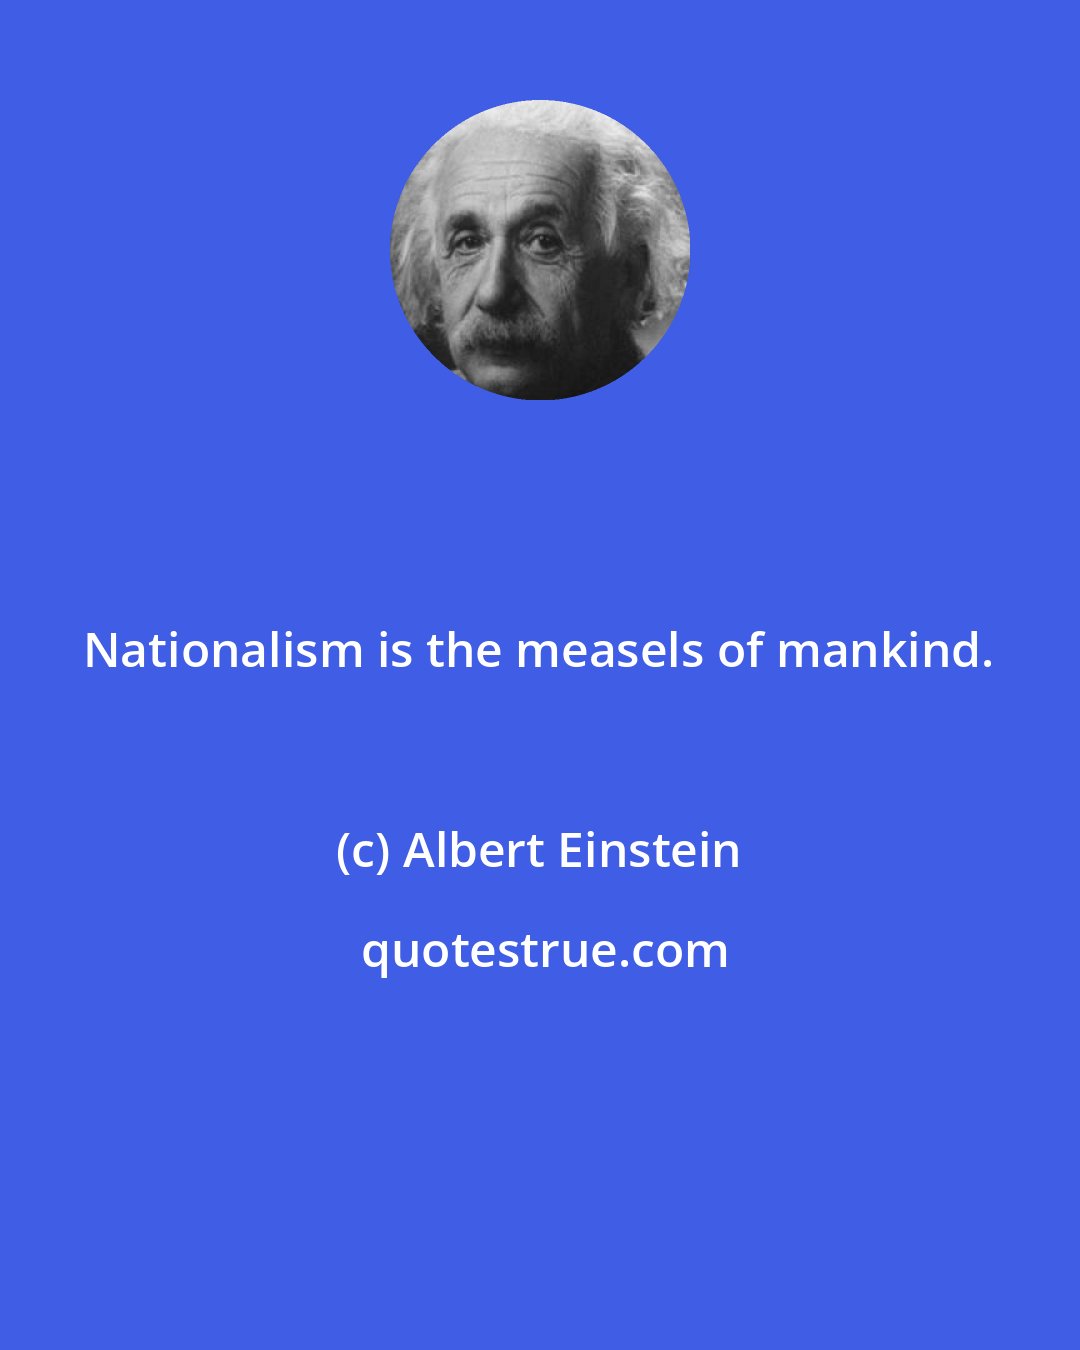 Albert Einstein: Nationalism is the measels of mankind.